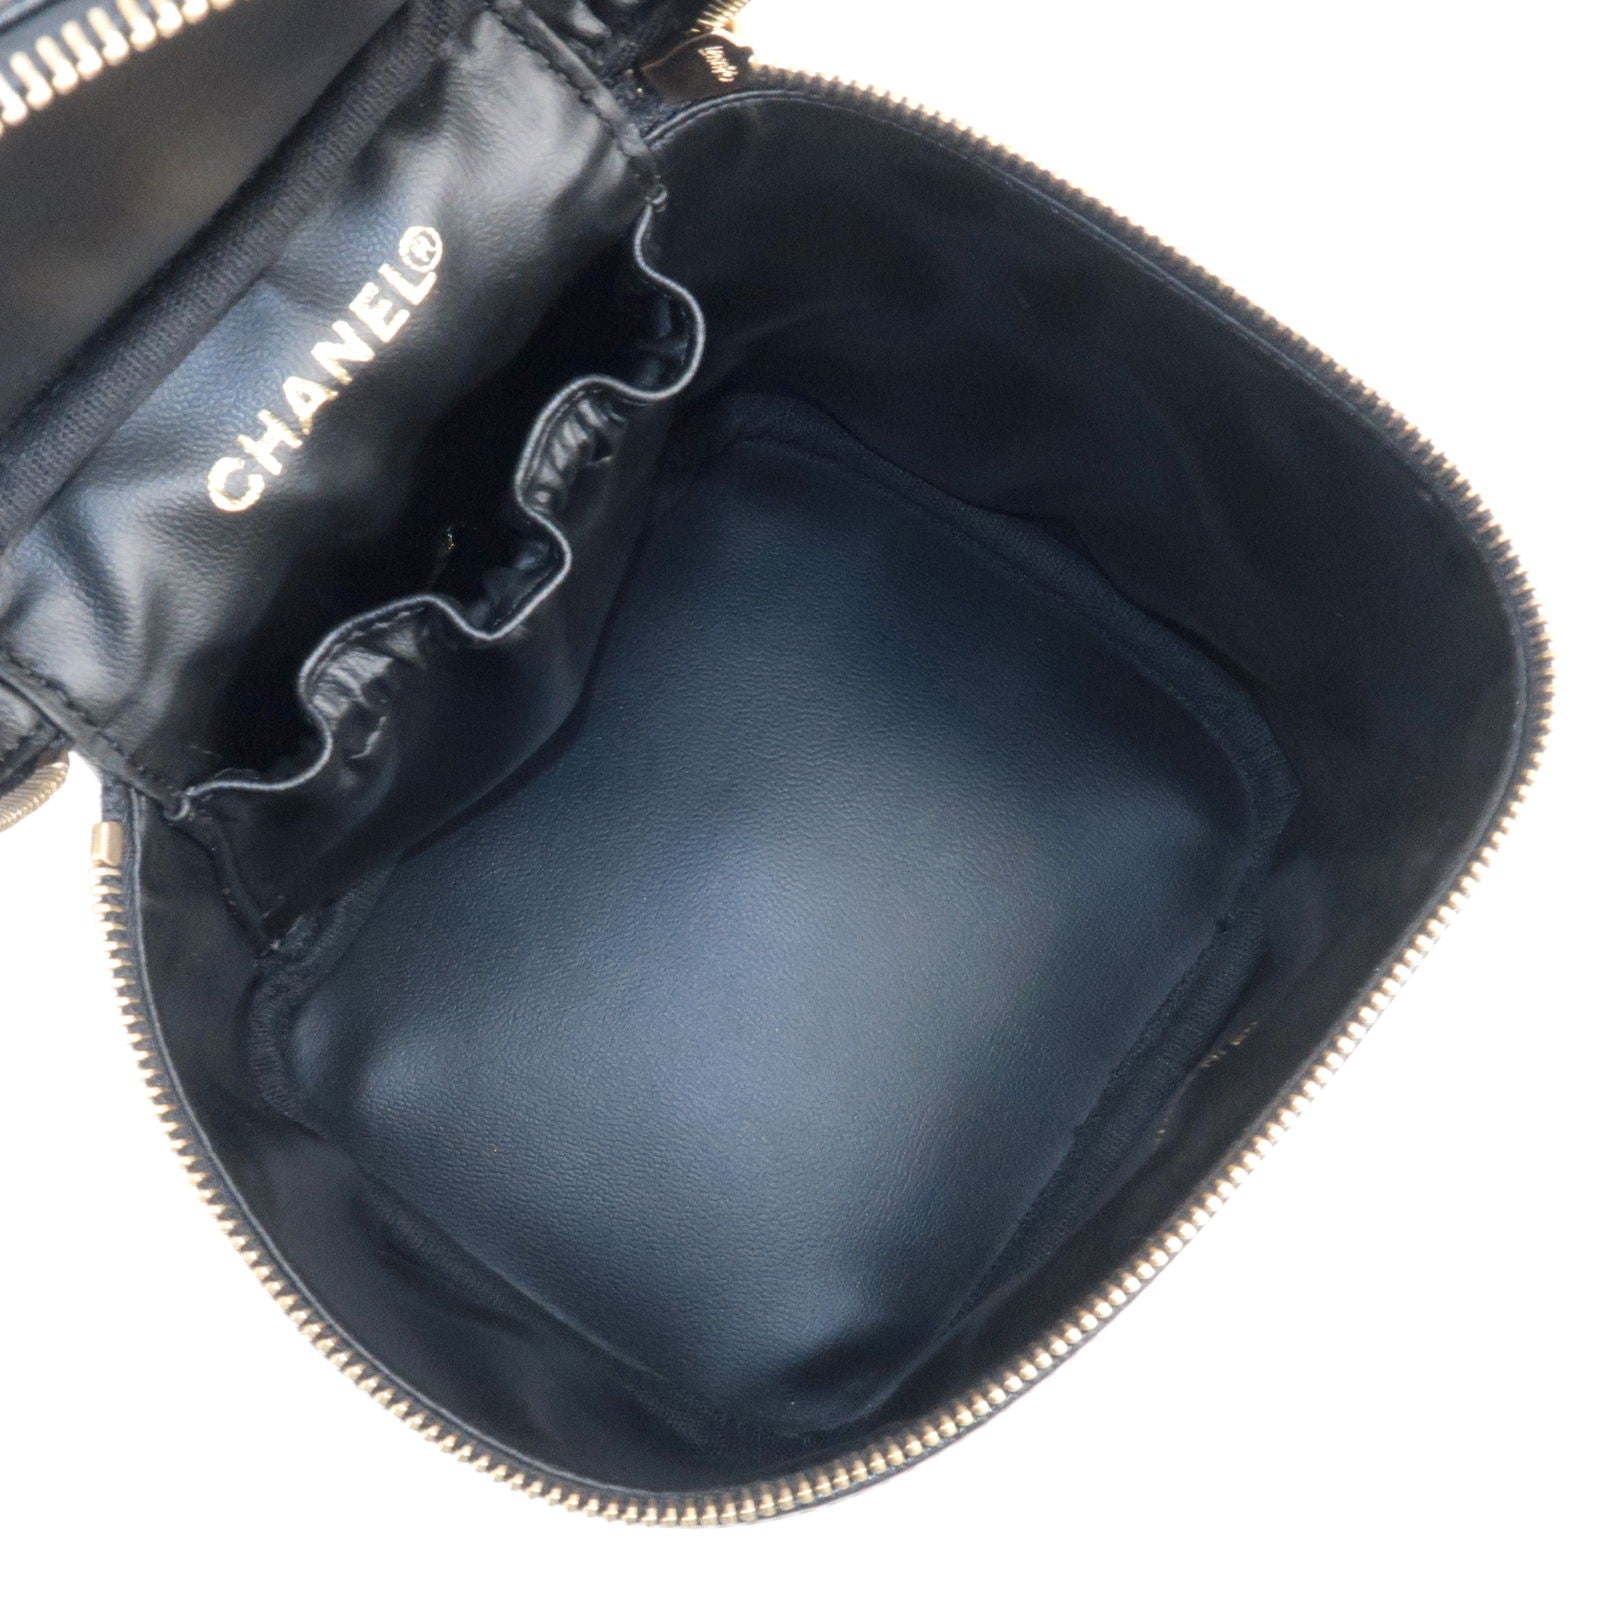 Bag - Skin - Bag - A01998 – dct - ep_vintage luxury Store - Caviar - Pouch  - Cosmetic - Vanity - Твидовый жакет пиджак куртка косуха в стиле chanel -  Black - CHANEL - Hand